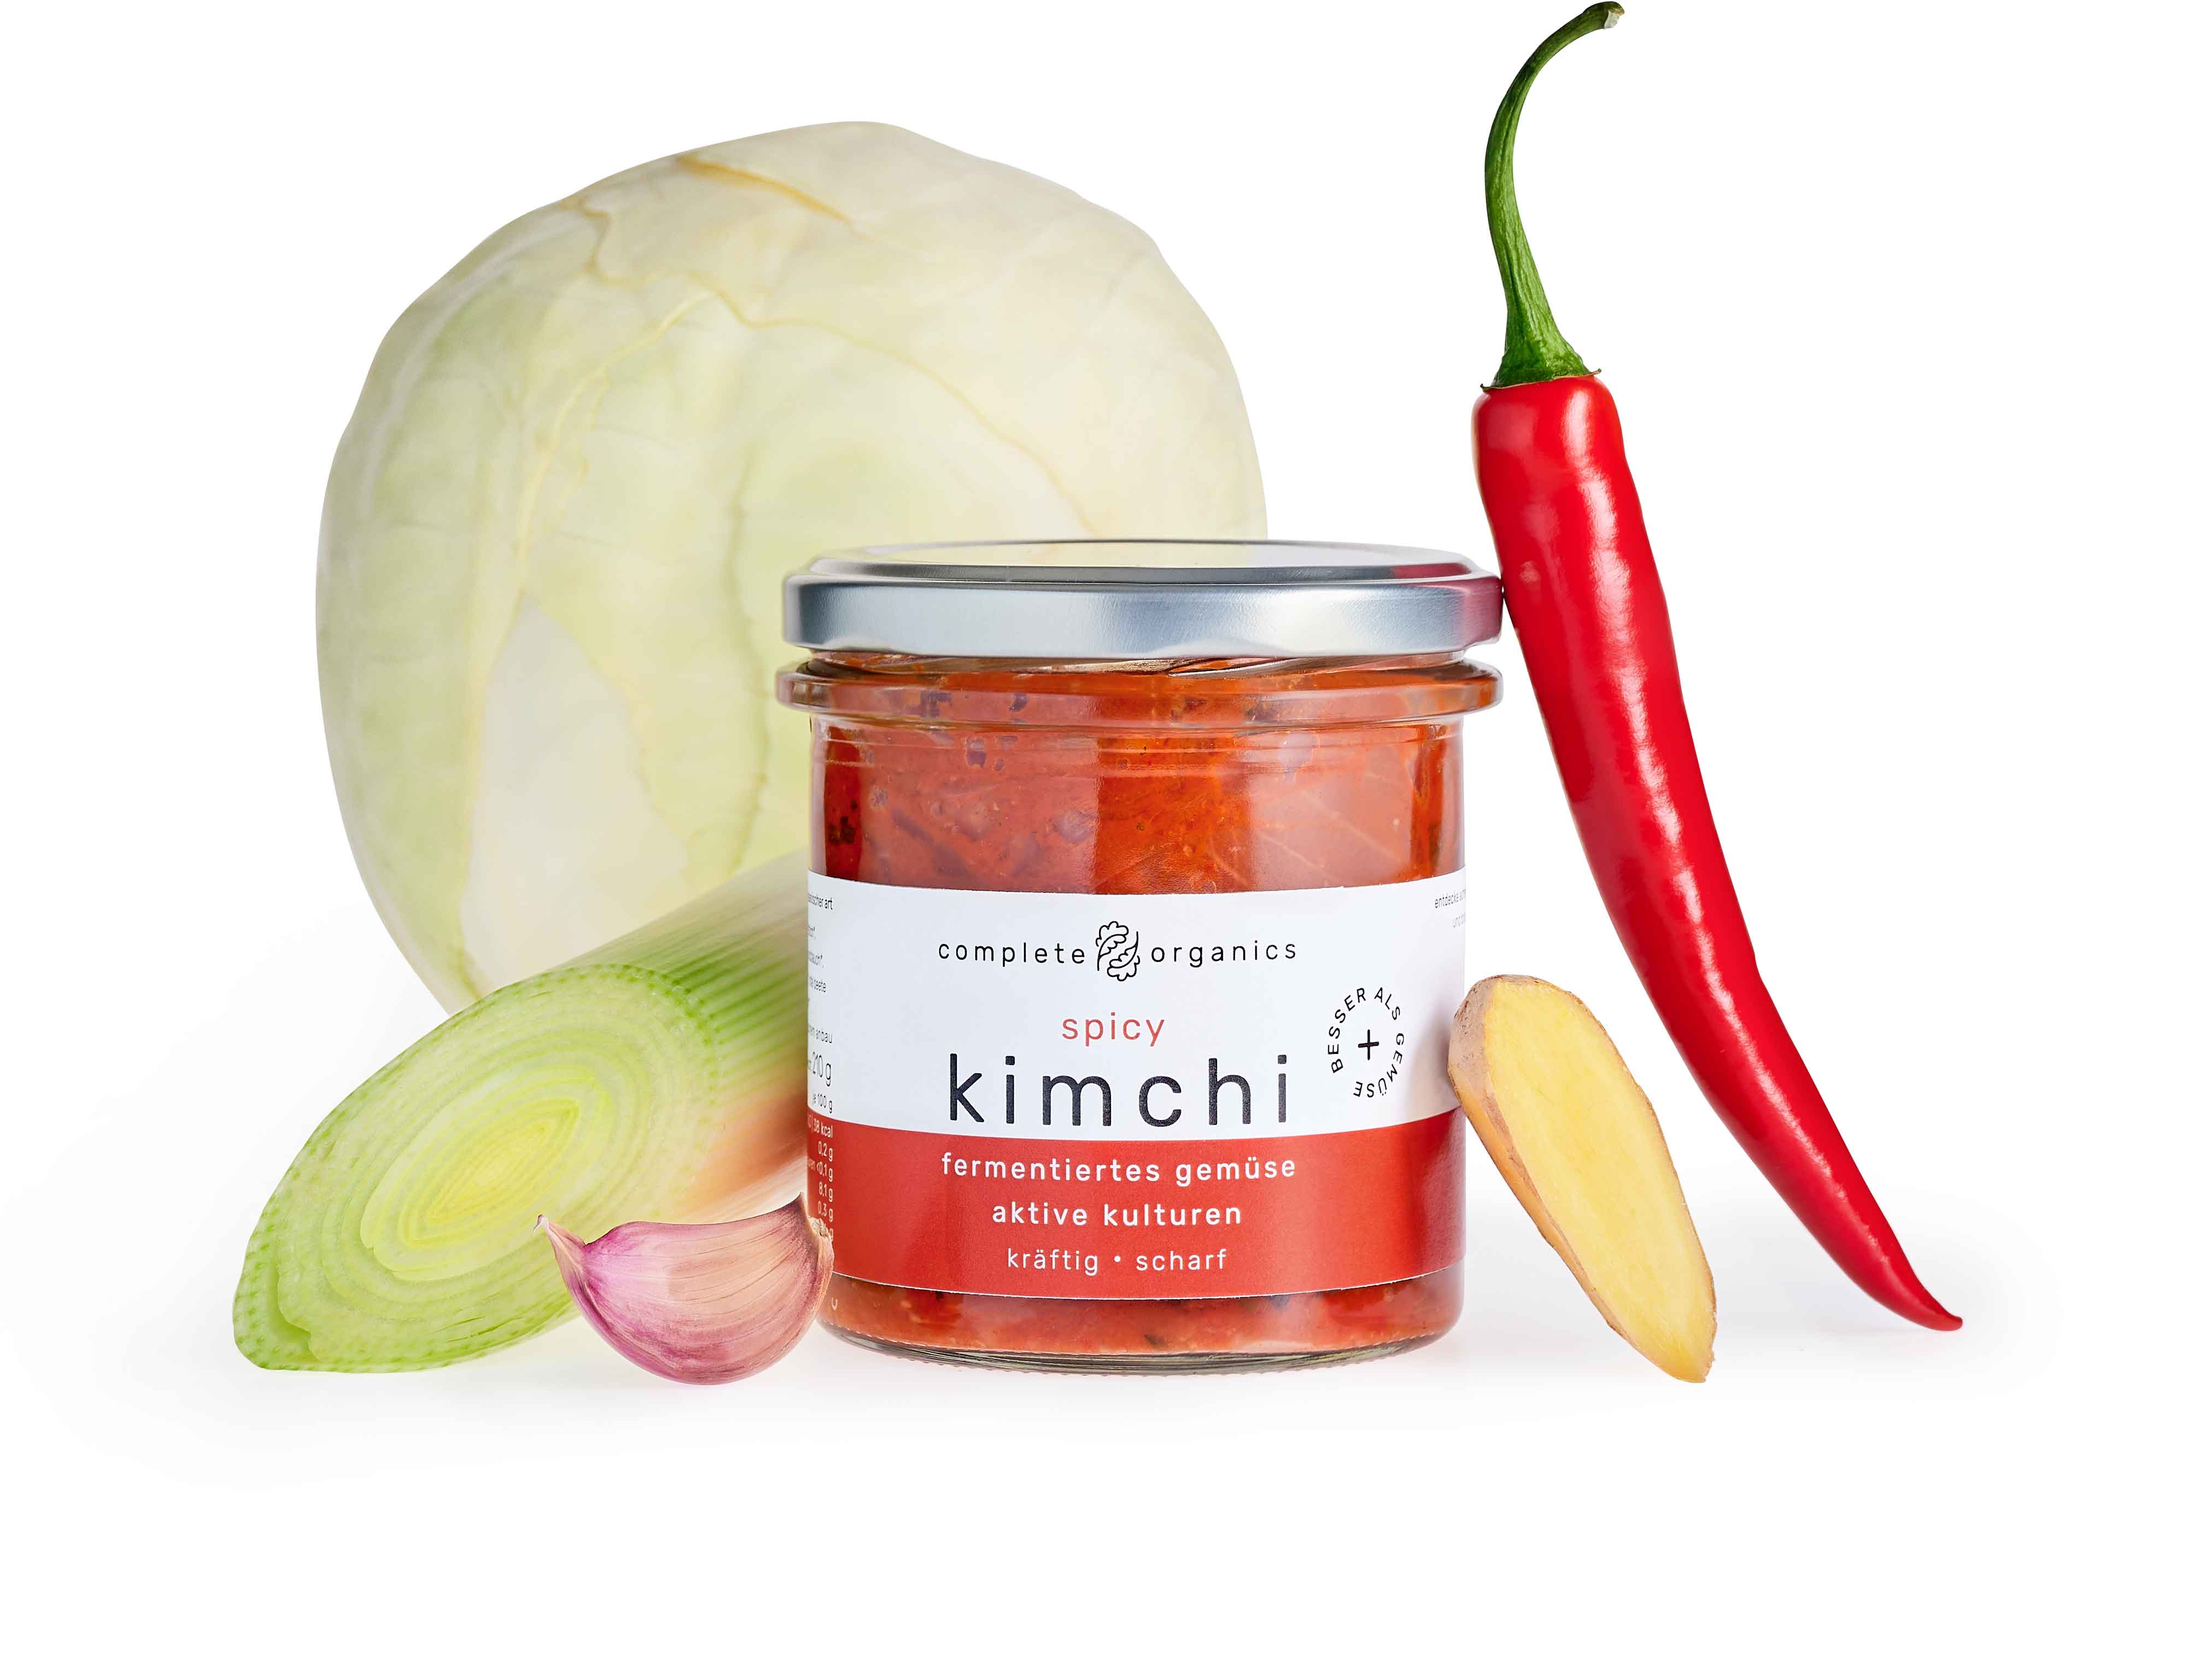 the original kimchi